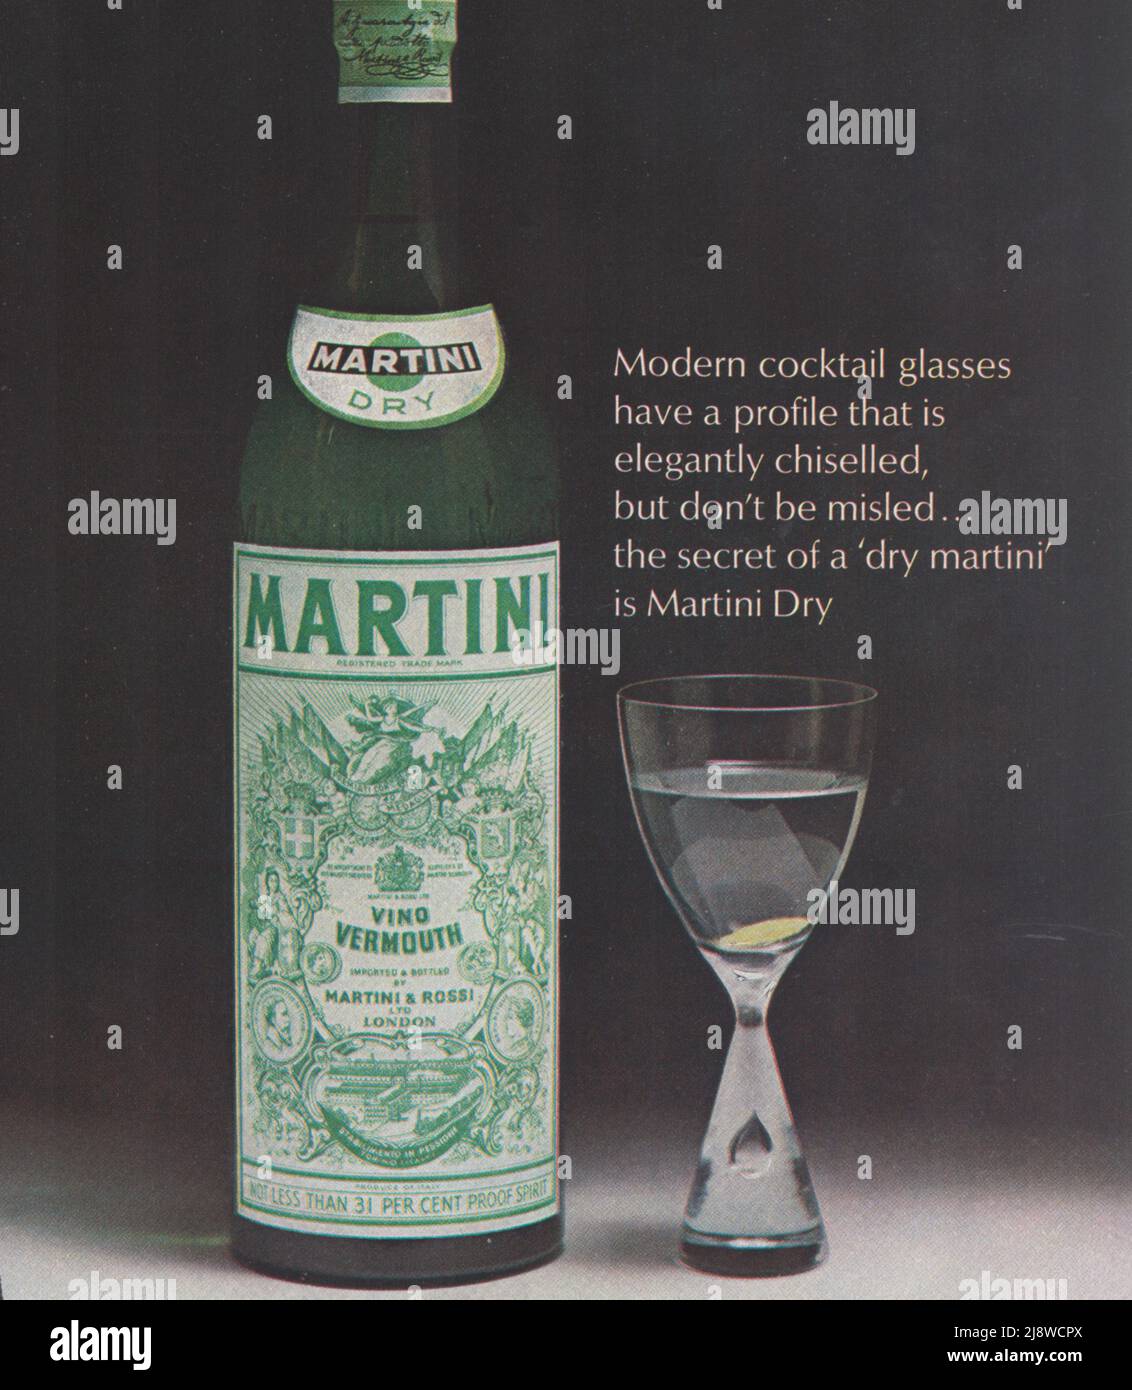 Martini vintage advertisement advert paper ad 1970s Martini bianco martini rosso Stock Photo